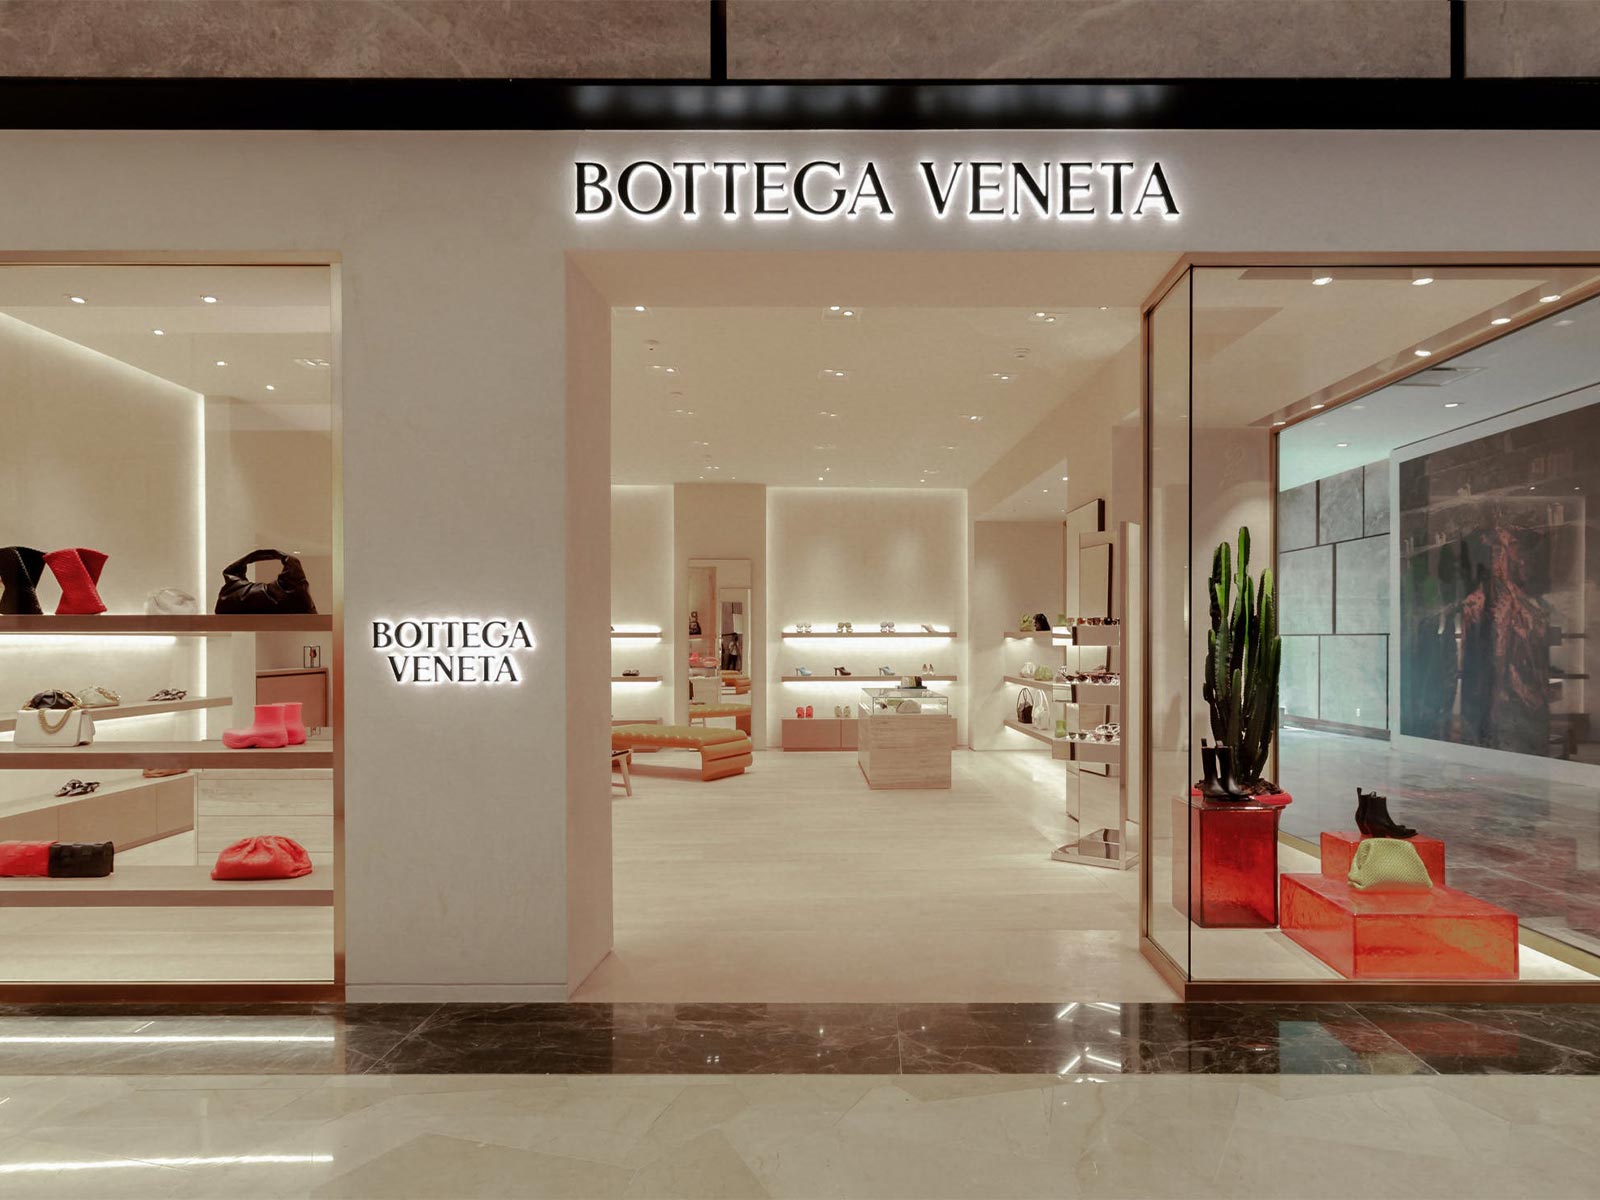 Bottega Veneta eliminates sales and creates its own resale platform